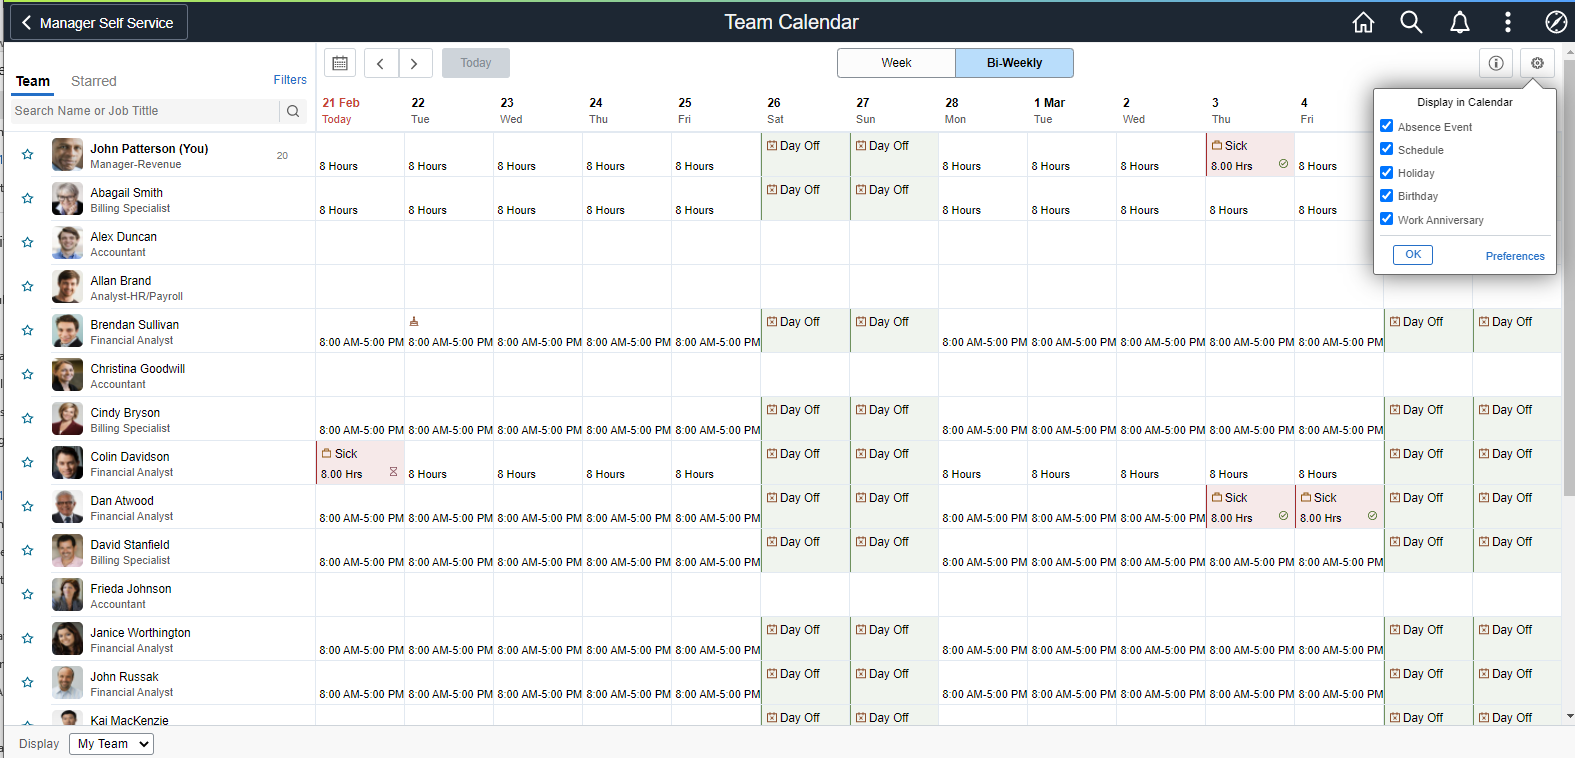 Preferences_Display in Calendar